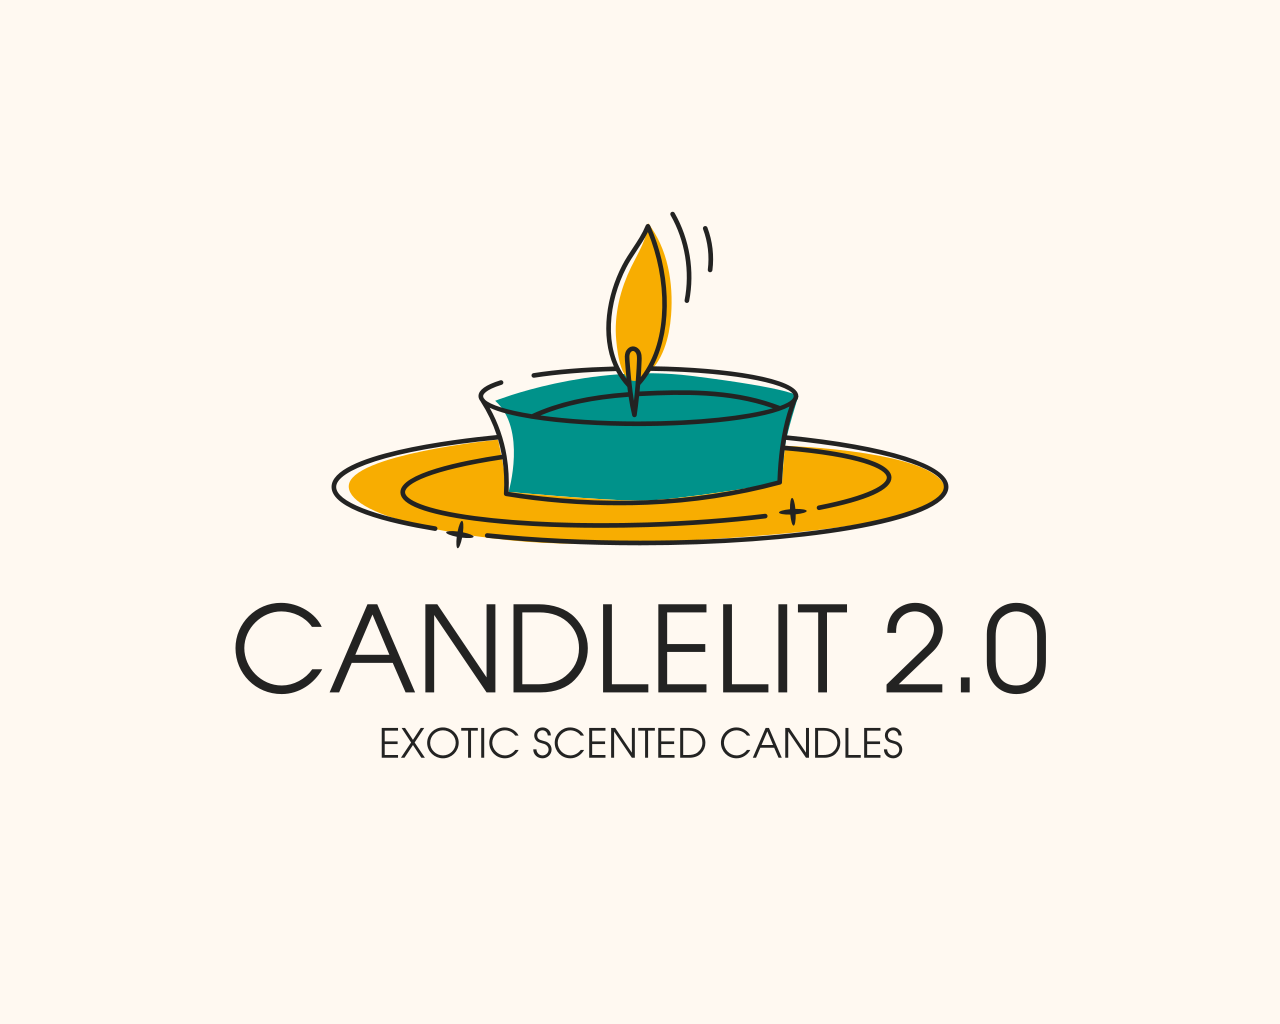 Candlelit 2.0's web page